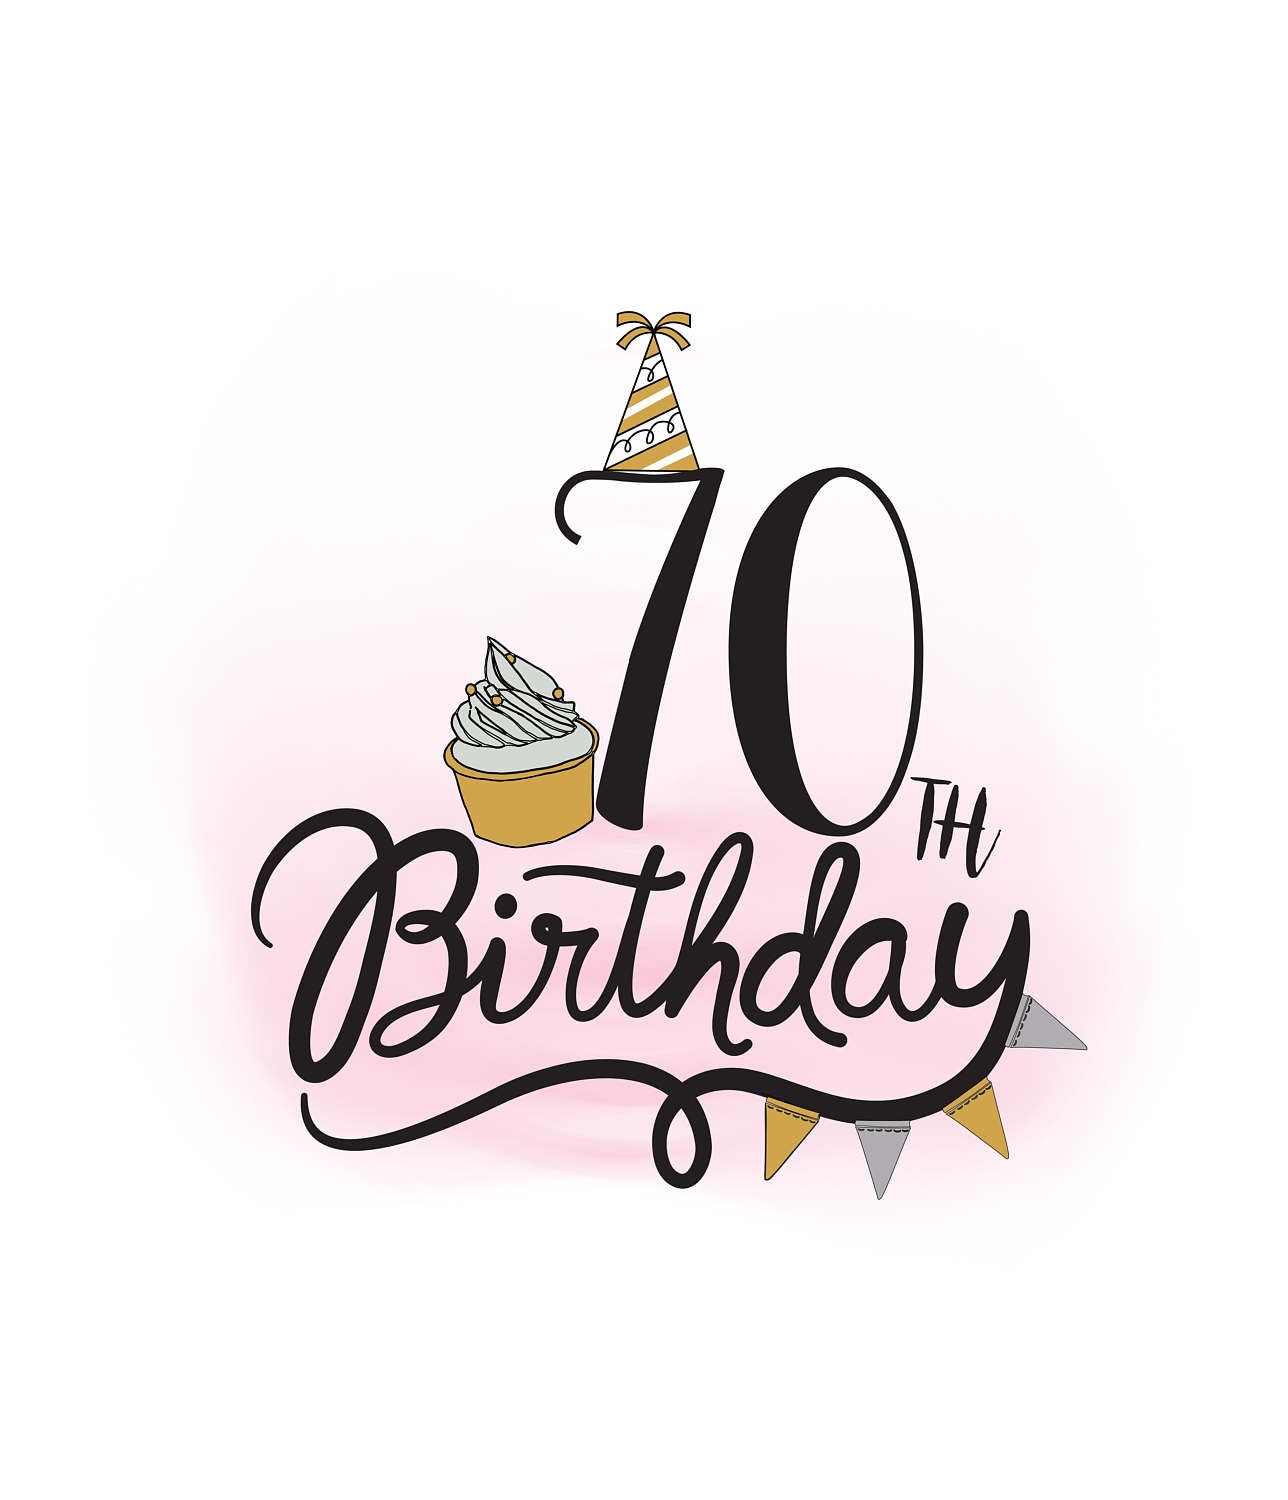  70th  Birthday  SVG clipart Birthday  Quote cupcake svg 